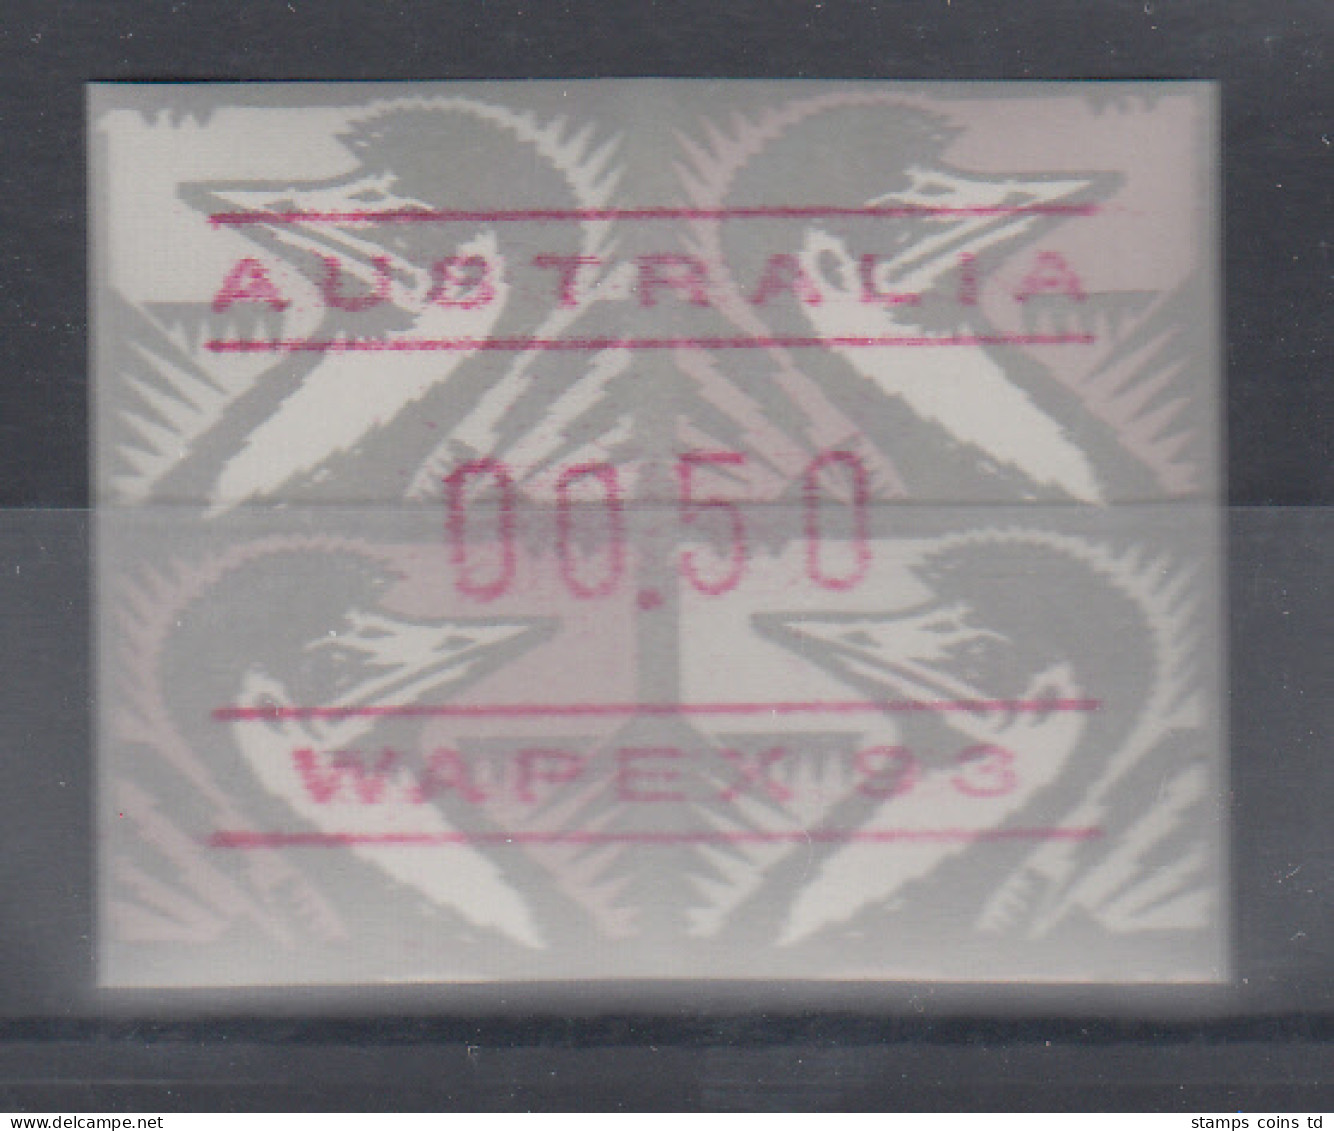 Australien Frama-ATM Emu Grau Sonderausgabe WAPEX 93 ** - Machine Labels [ATM]